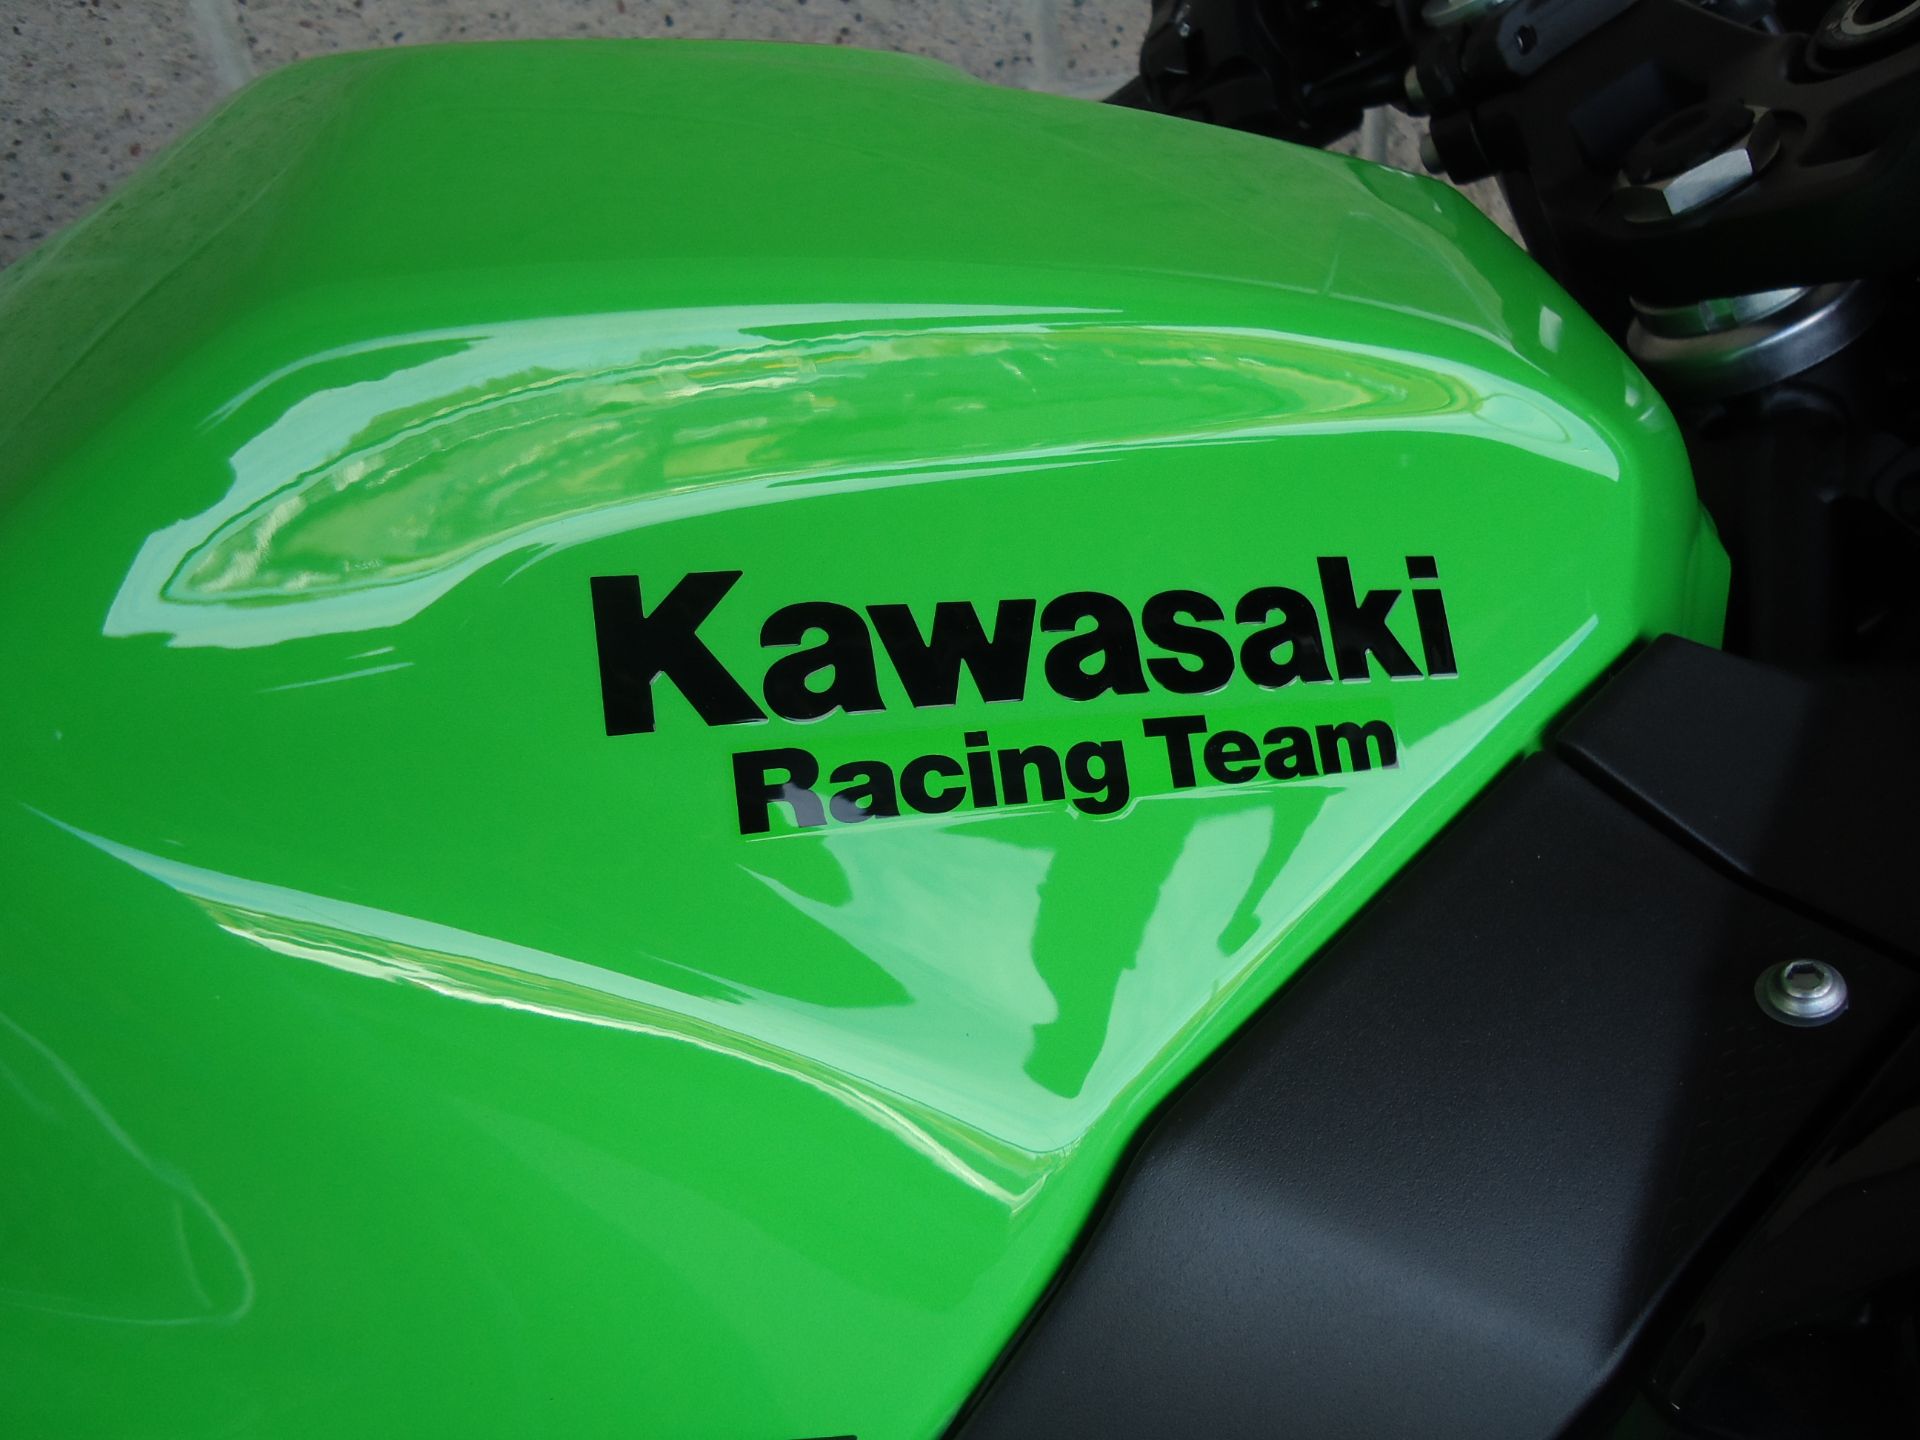 2022 Kawasaki Ninja 400 ABS KRT Edition in Denver, Colorado - Photo 13